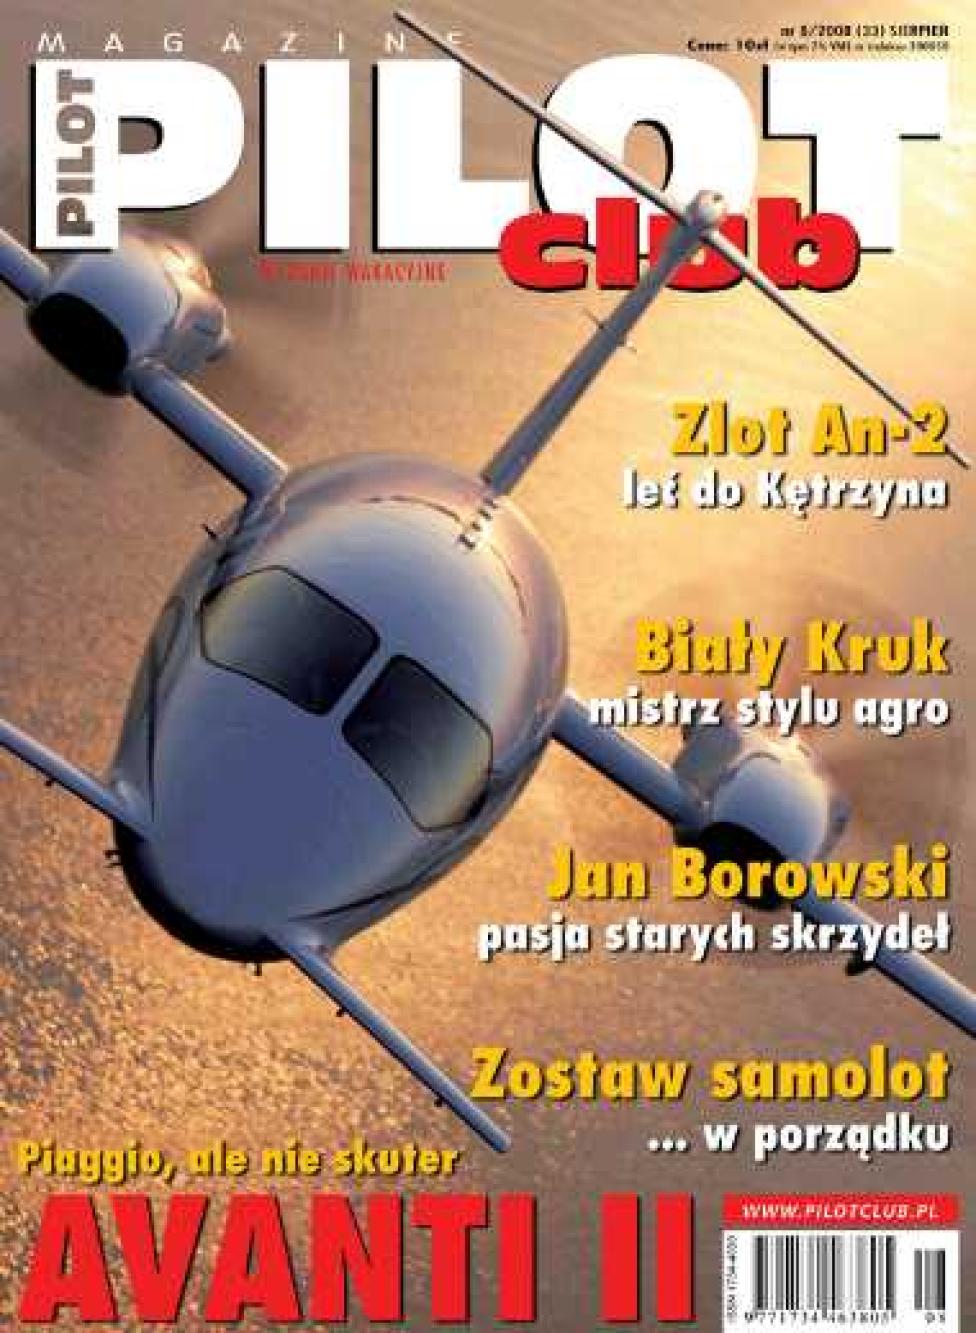 Sierpniowy Pilot Club